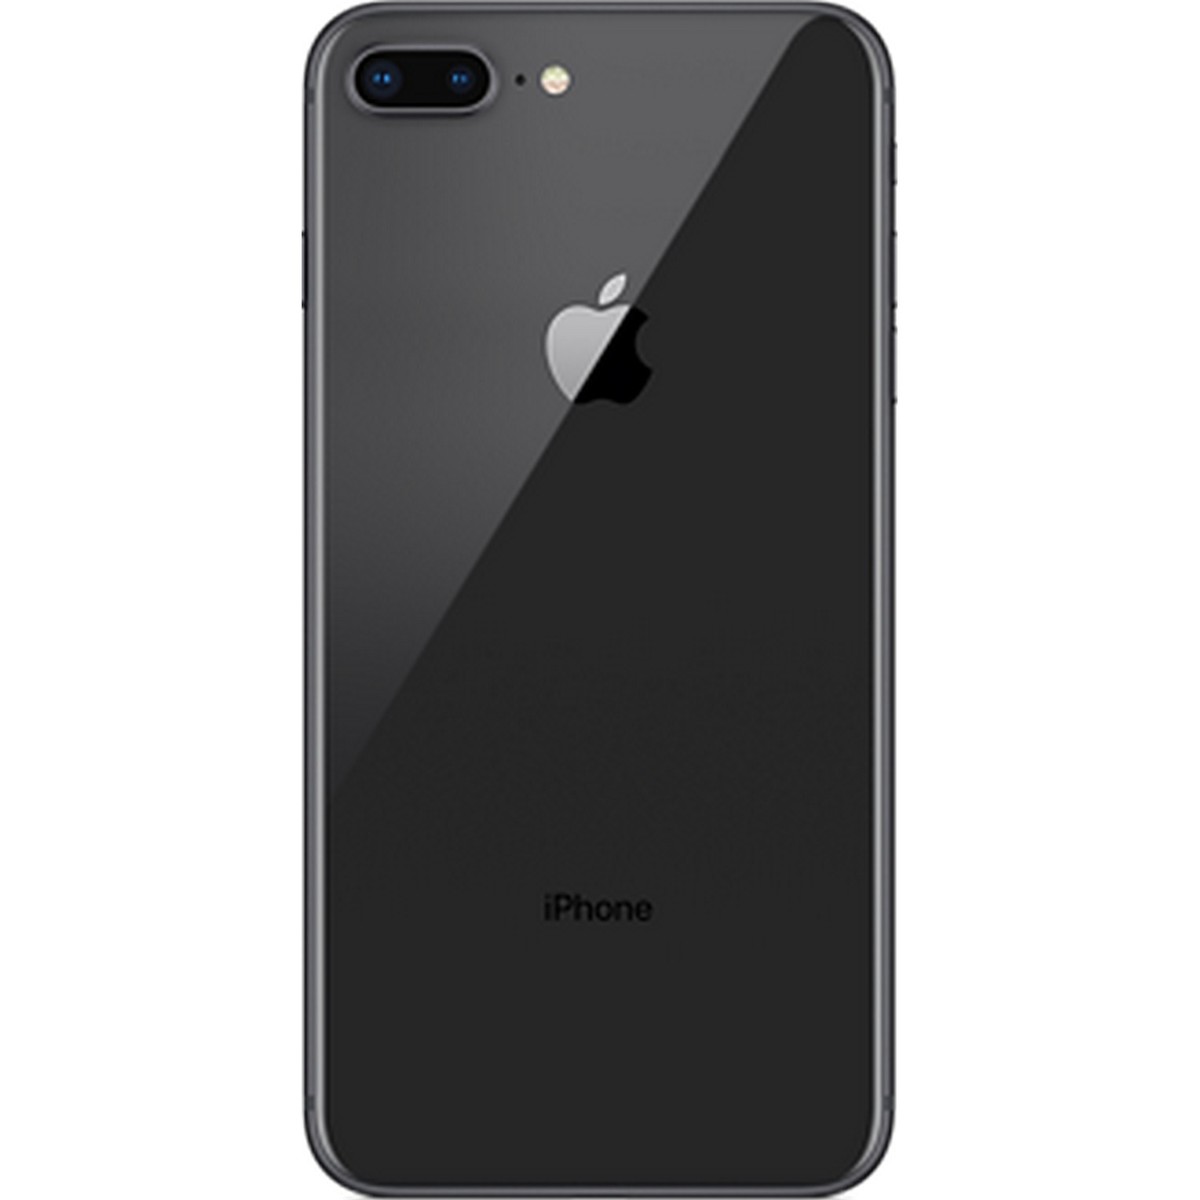 Apple iPhone 8 Plus 64GB Space Gray